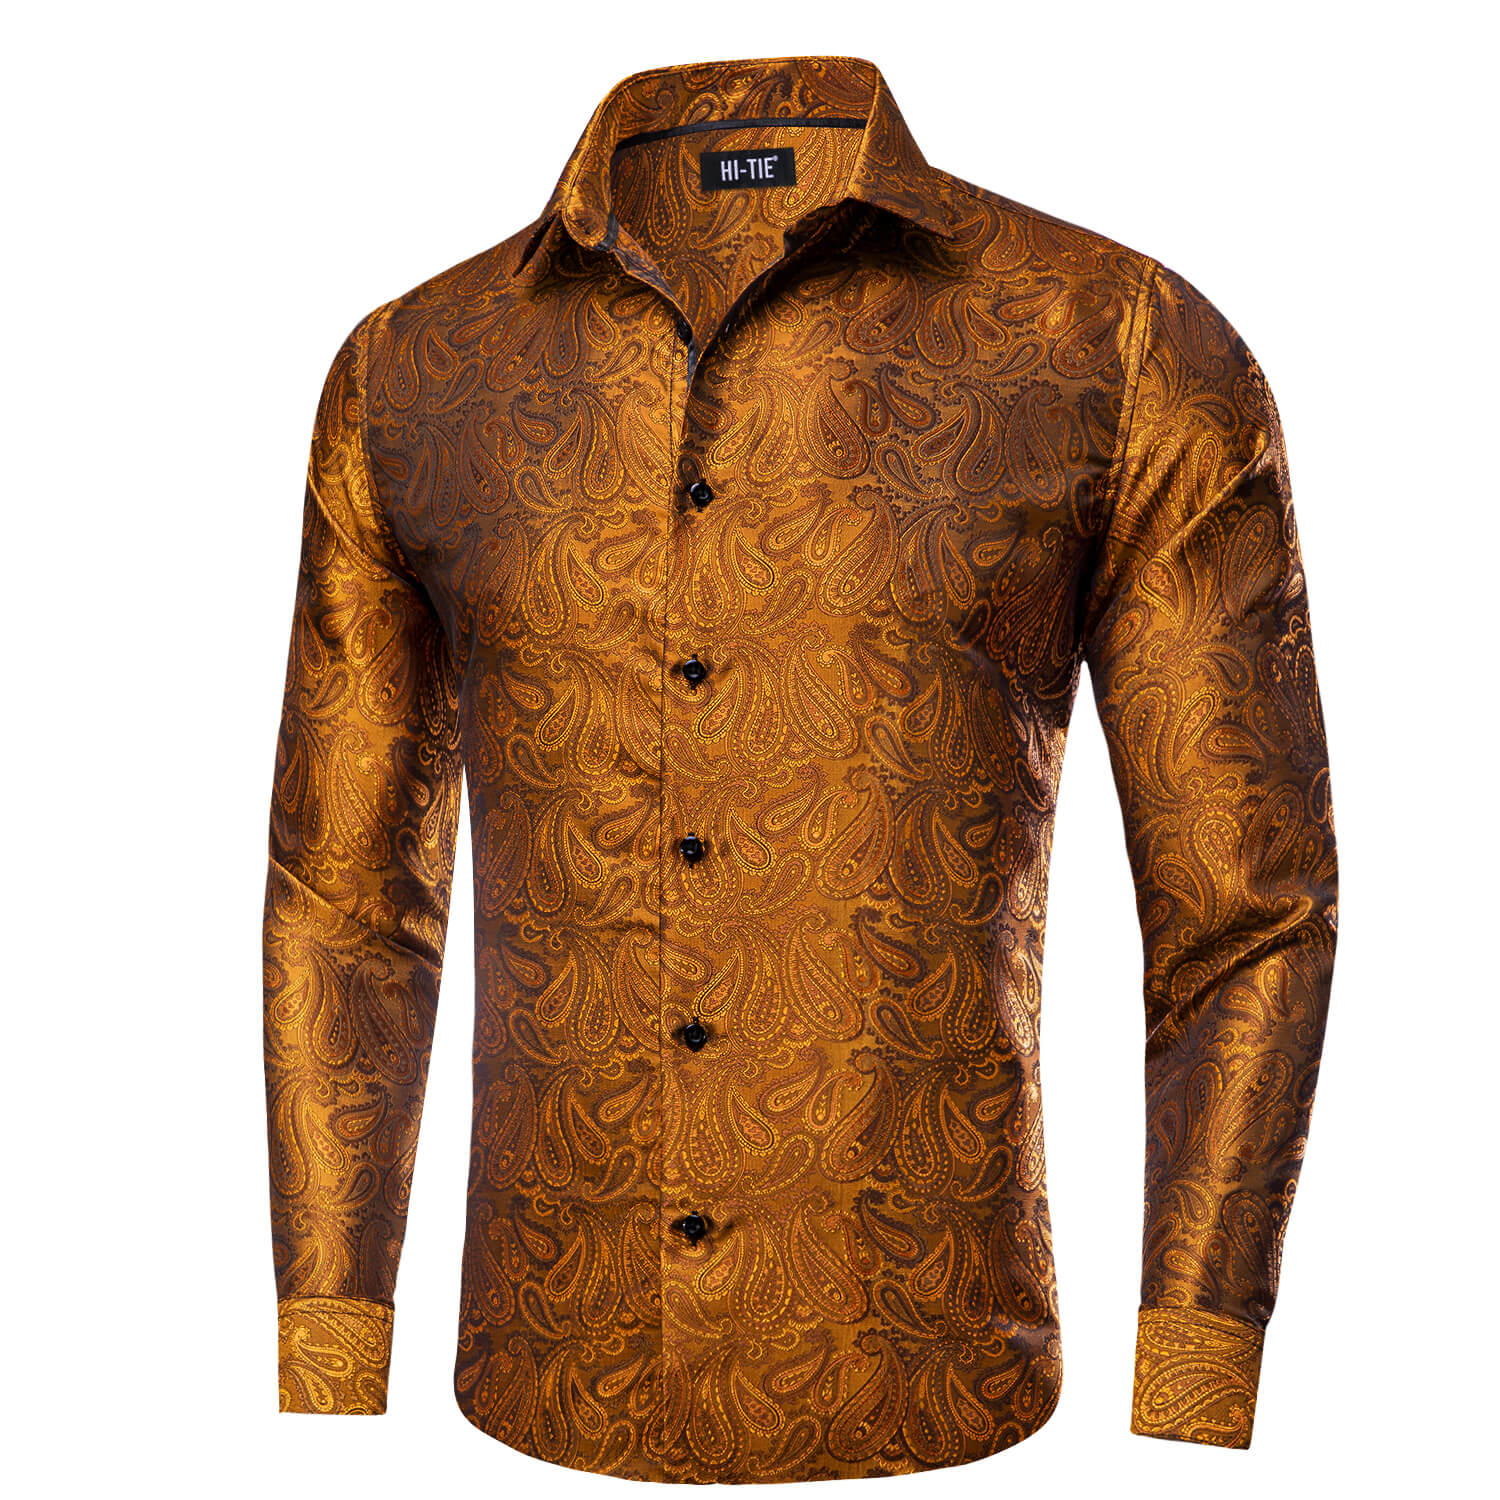 Hi-Tie Men's Shirt Button Down Bronze Brown Paisley Silk Shirt Top Hot